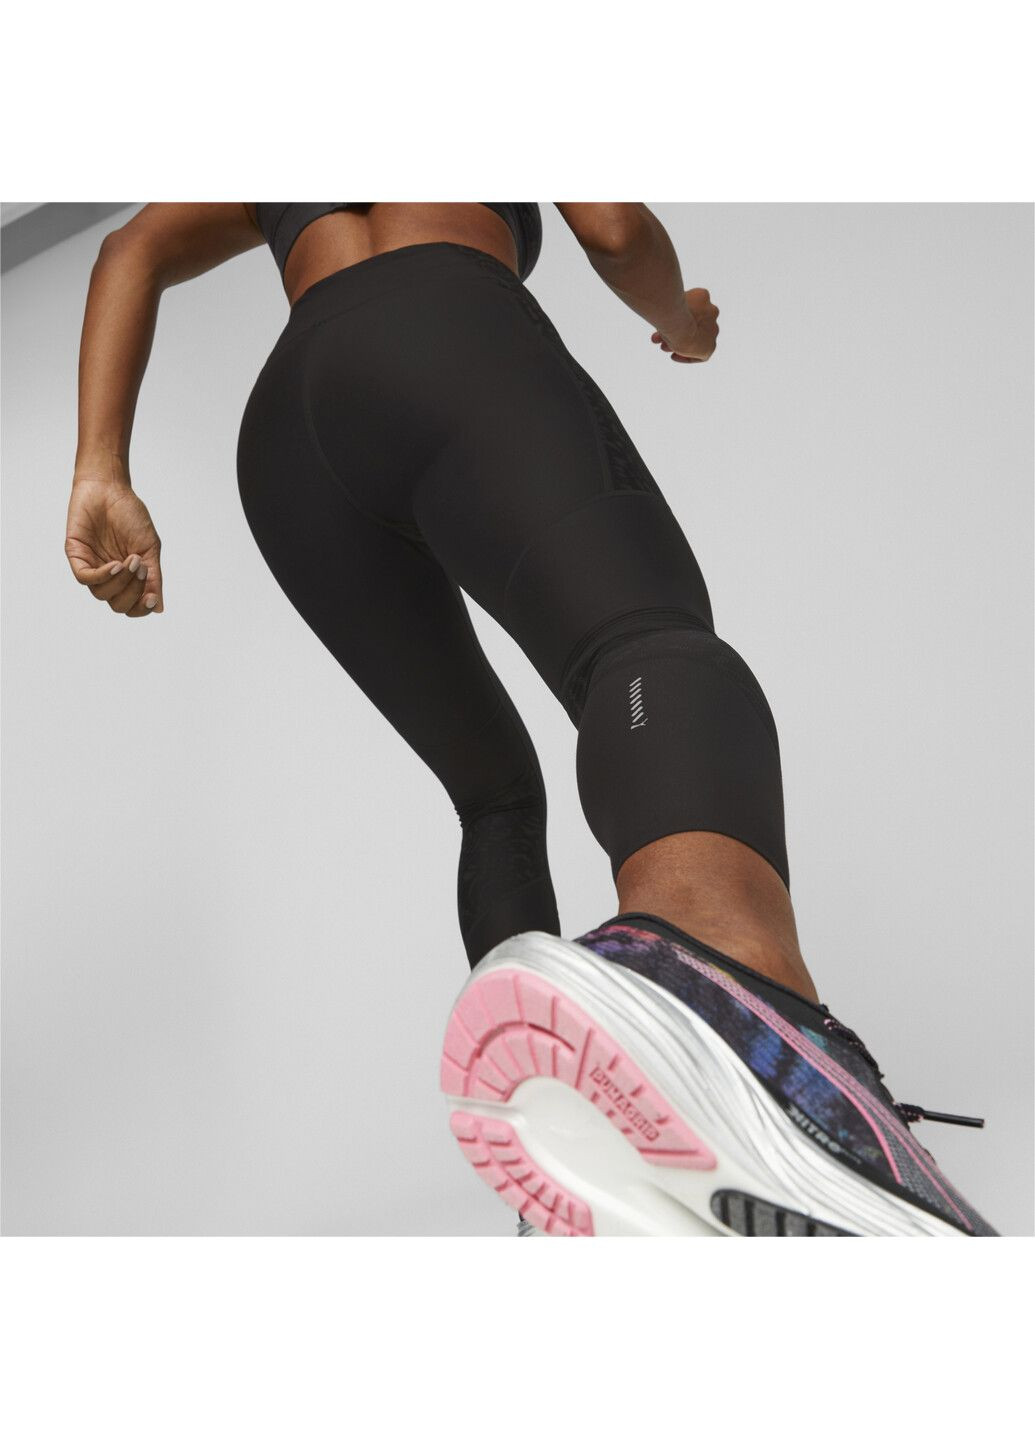 Черные демисезонные леггинсы ultraform women's high-waisted running tights Puma